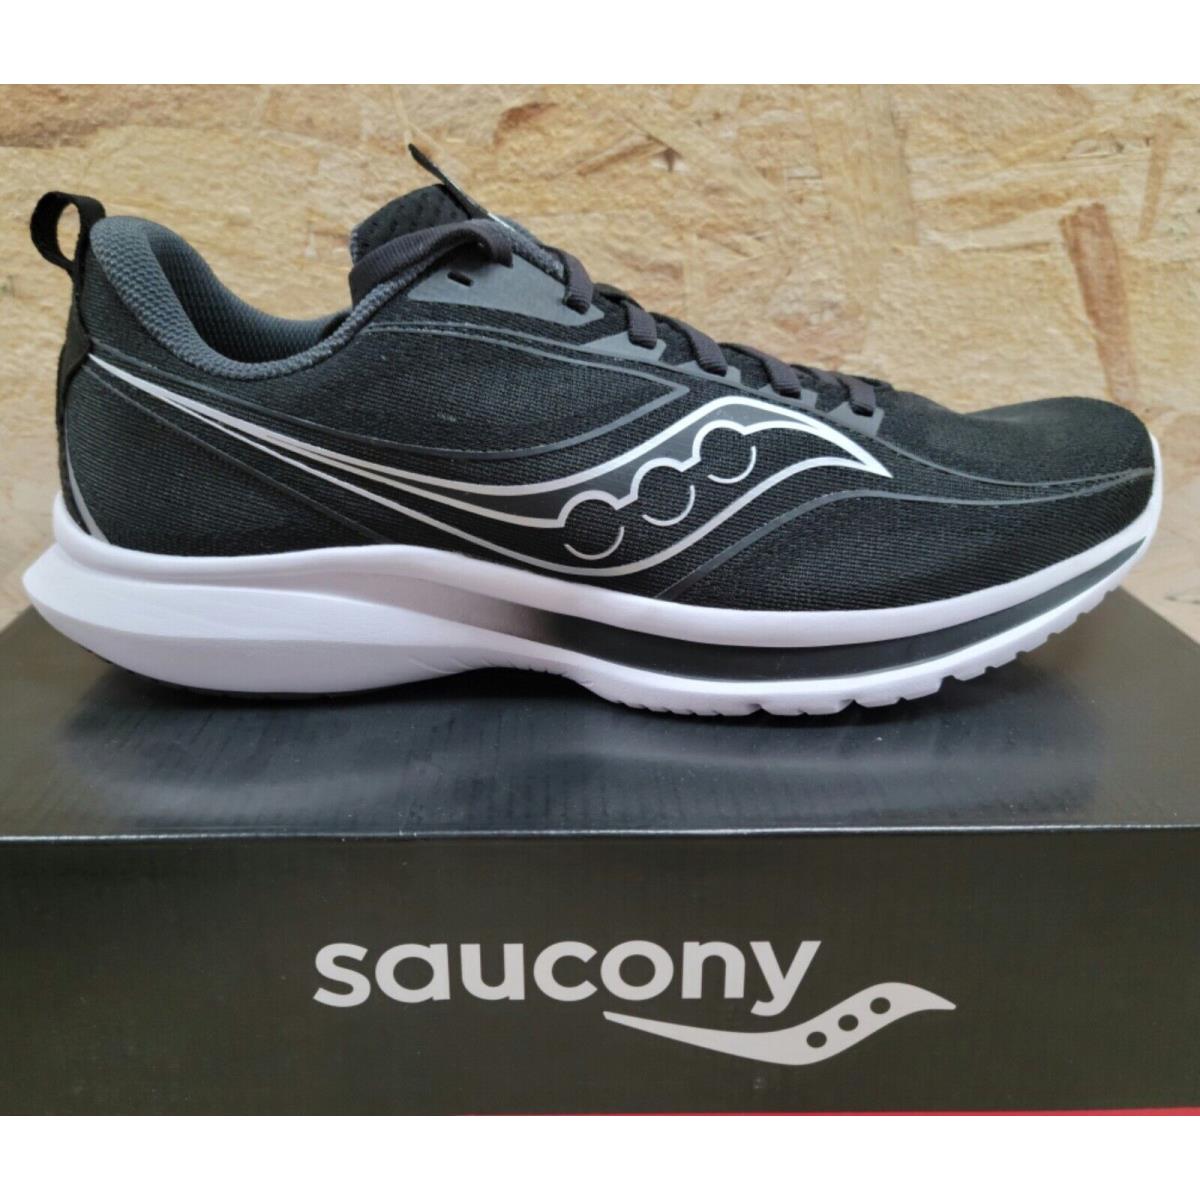 Saucony shoes Kinvara - Black 0